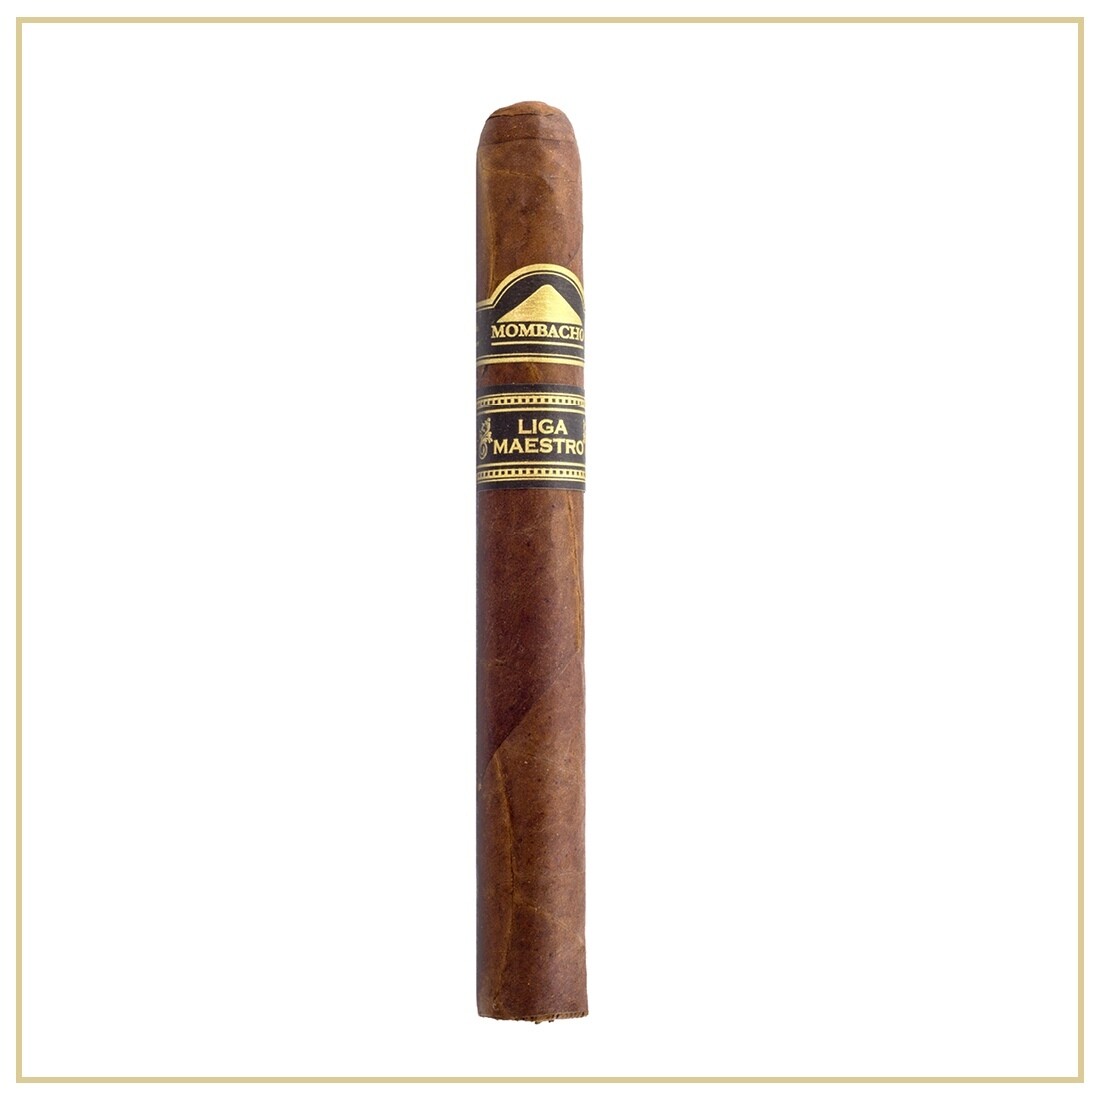 Mombacho Liga Maestro Hermoso 6 x 46 Single Cigar